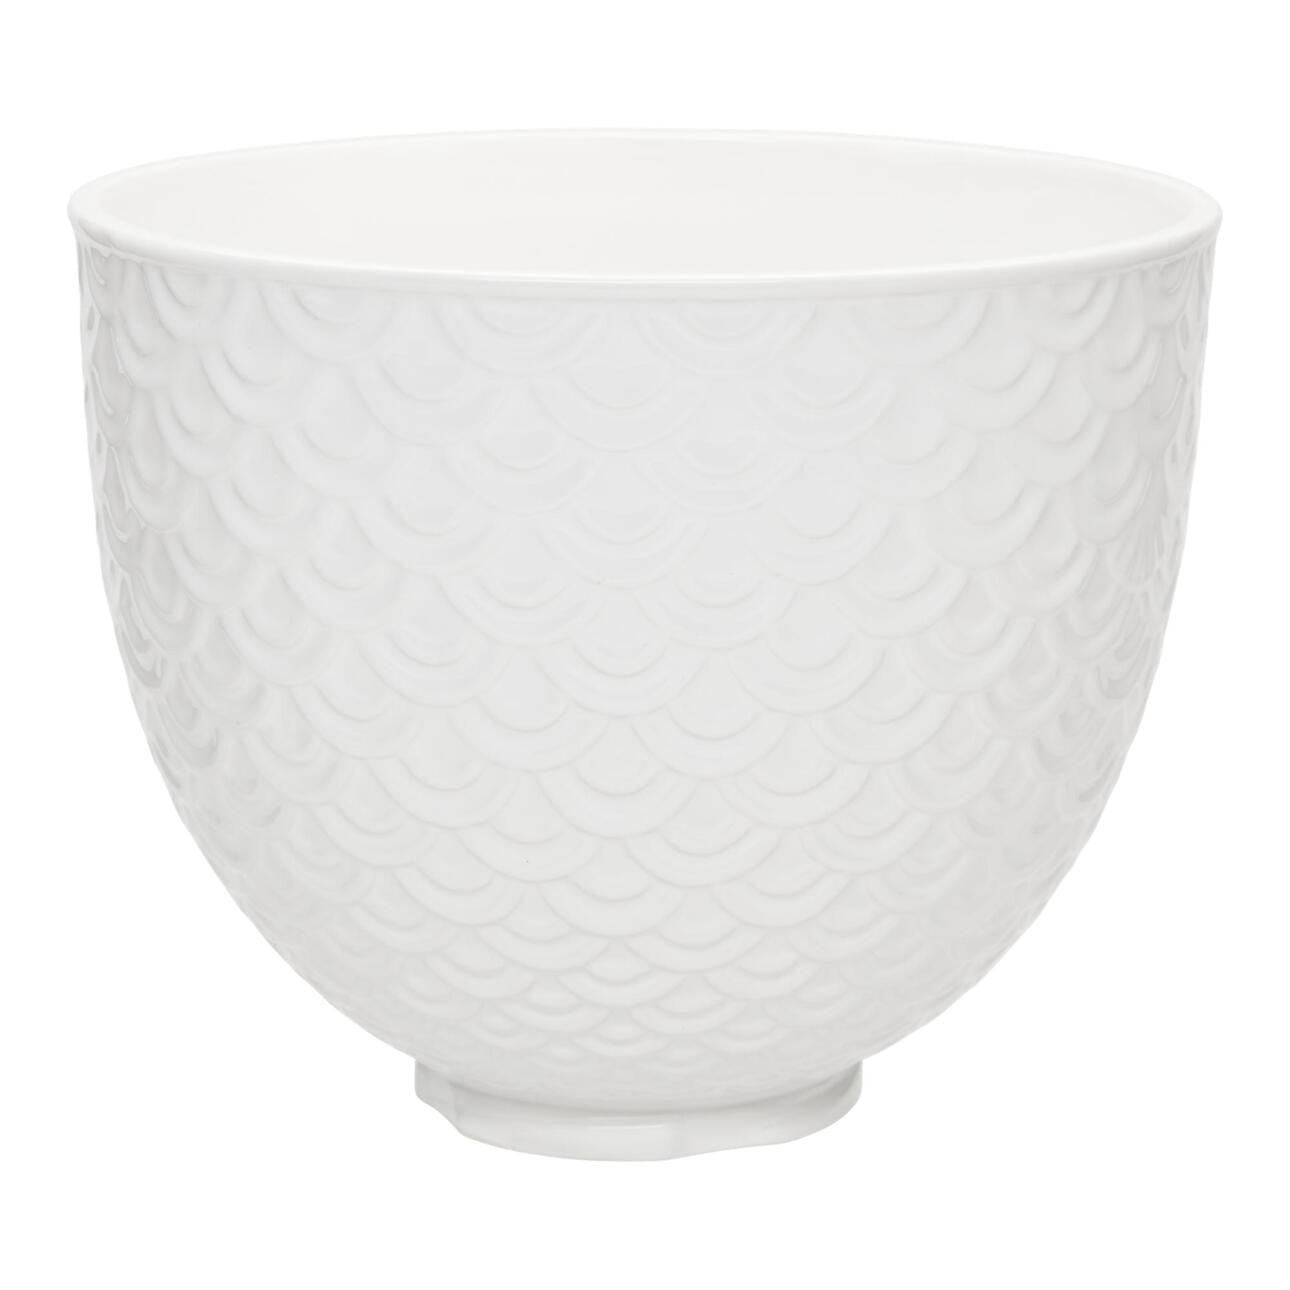 Elegant White Mermaid Lace 1.2 Gal Ceramic Mixer Bowl